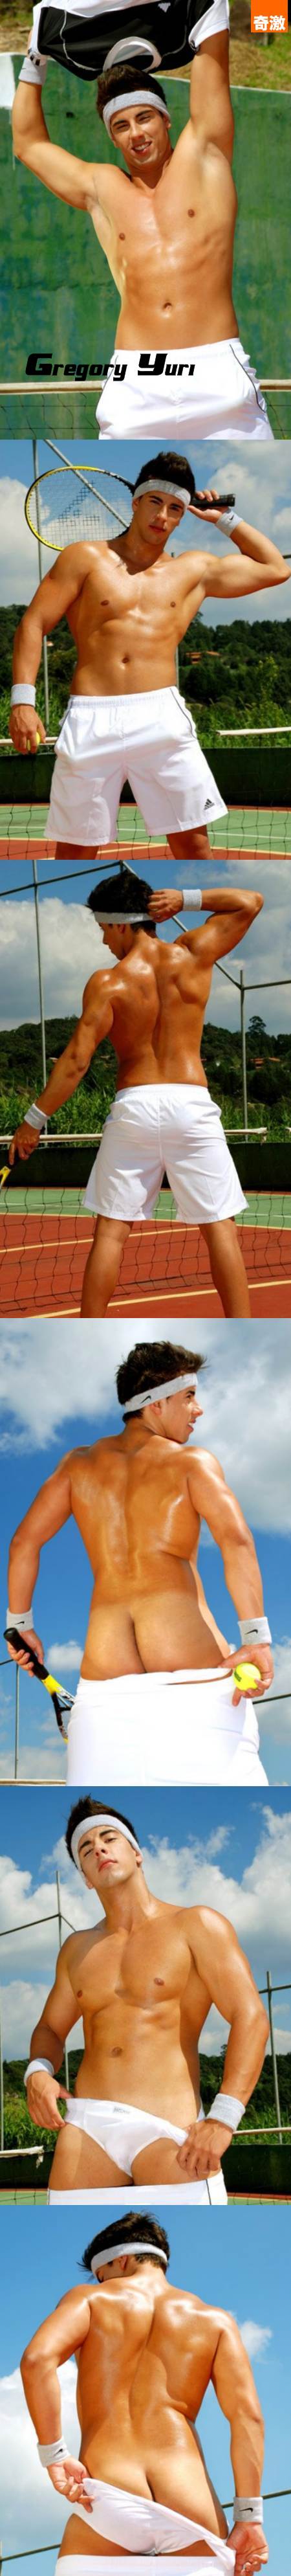 Hot Tennis Player Gregory Yuri